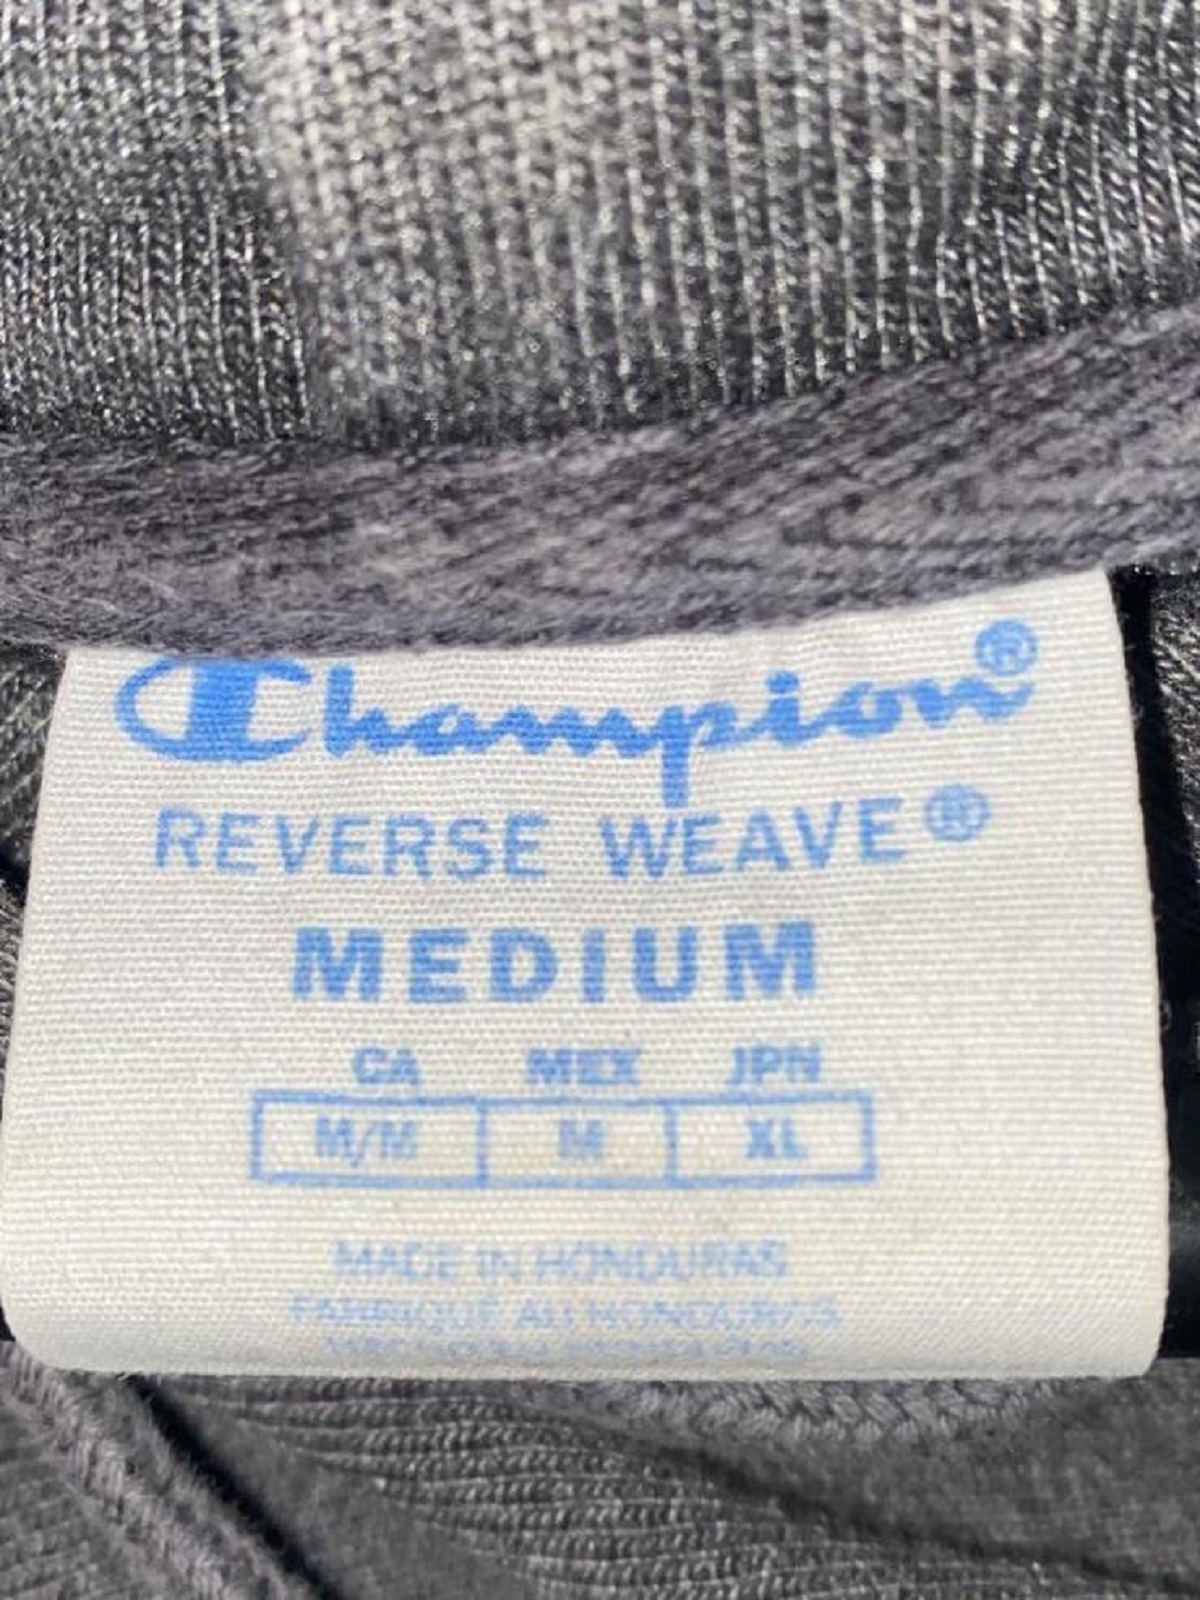 label - Champion Reverse Weave Medium Made In Honduras Fabriqu